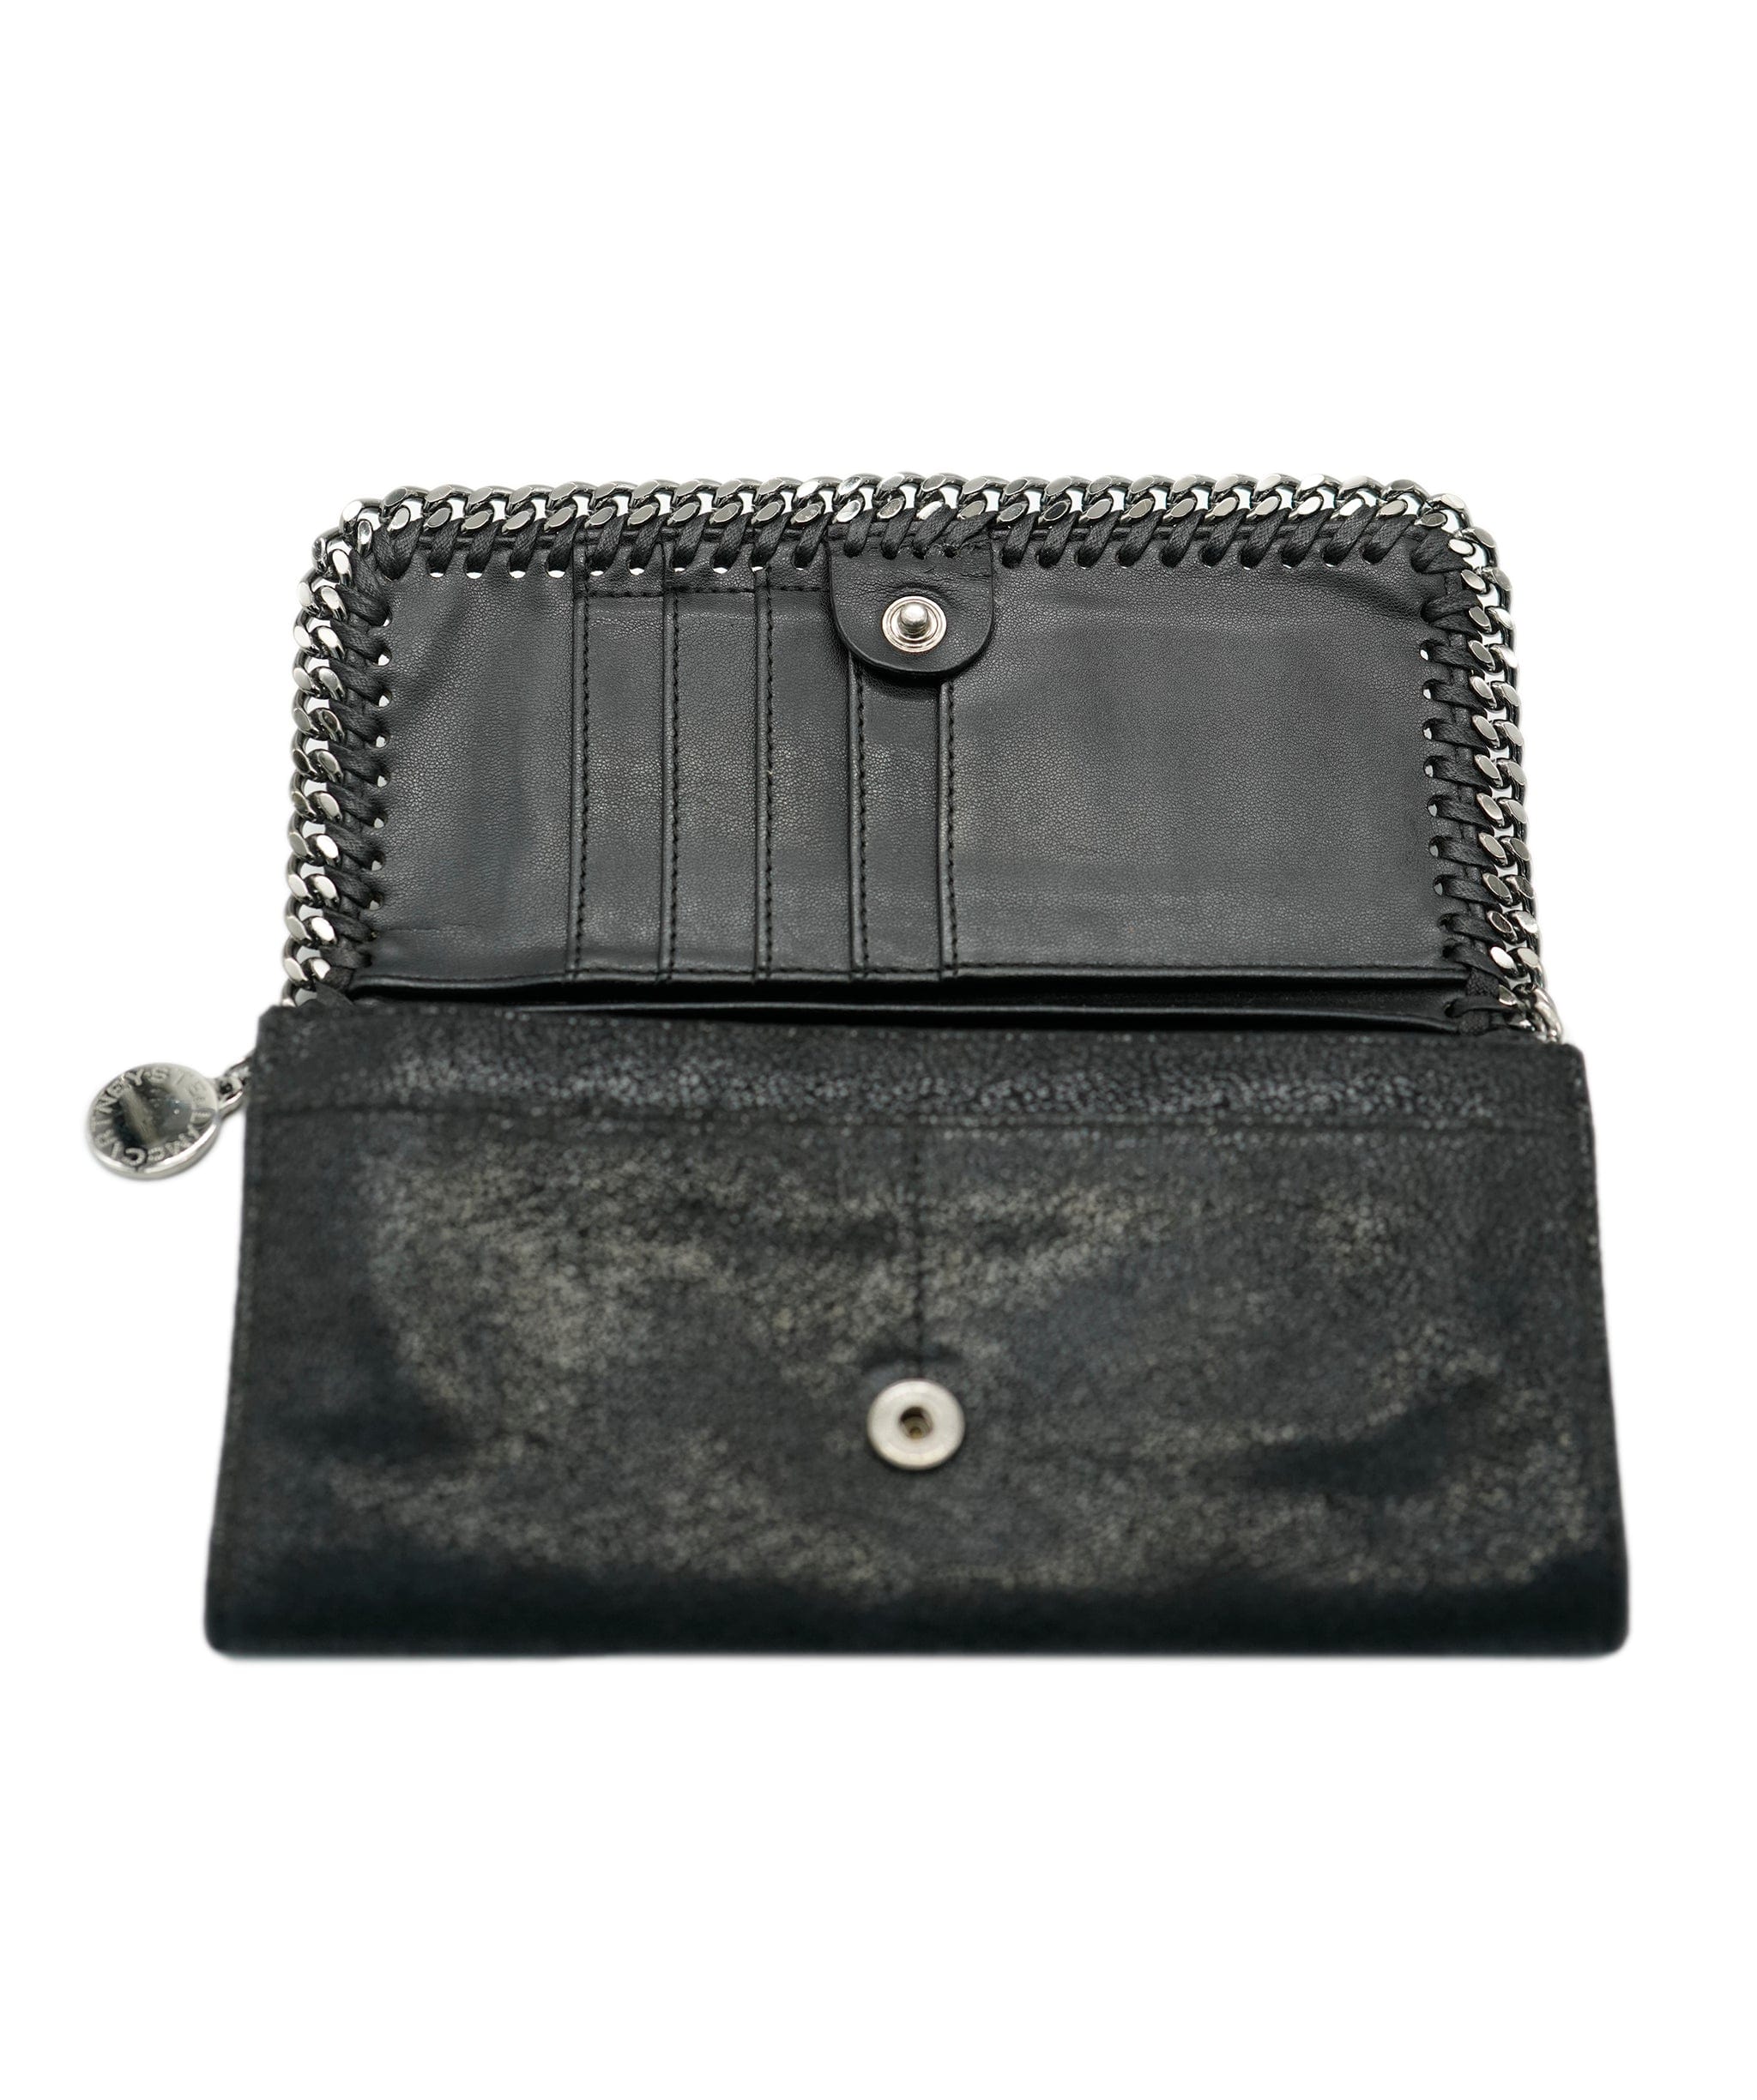 Stella McCartney Stella McCartney Black Leather Wallet